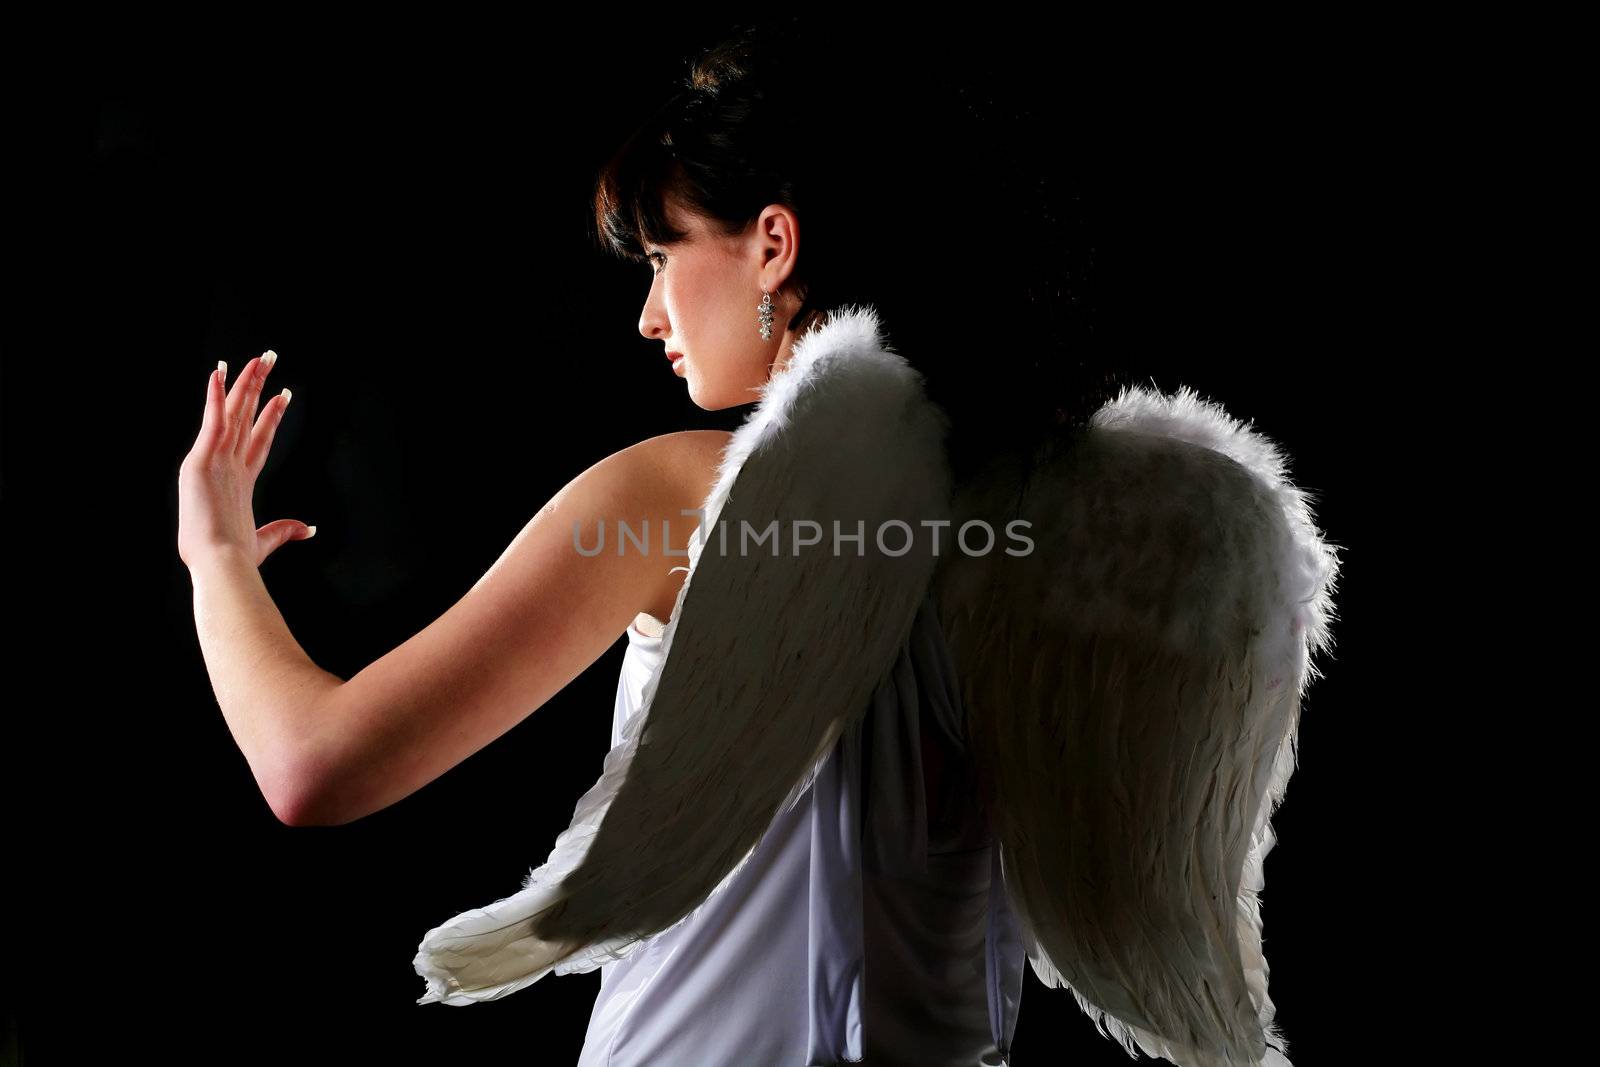 An image of a girl dressed like an angel